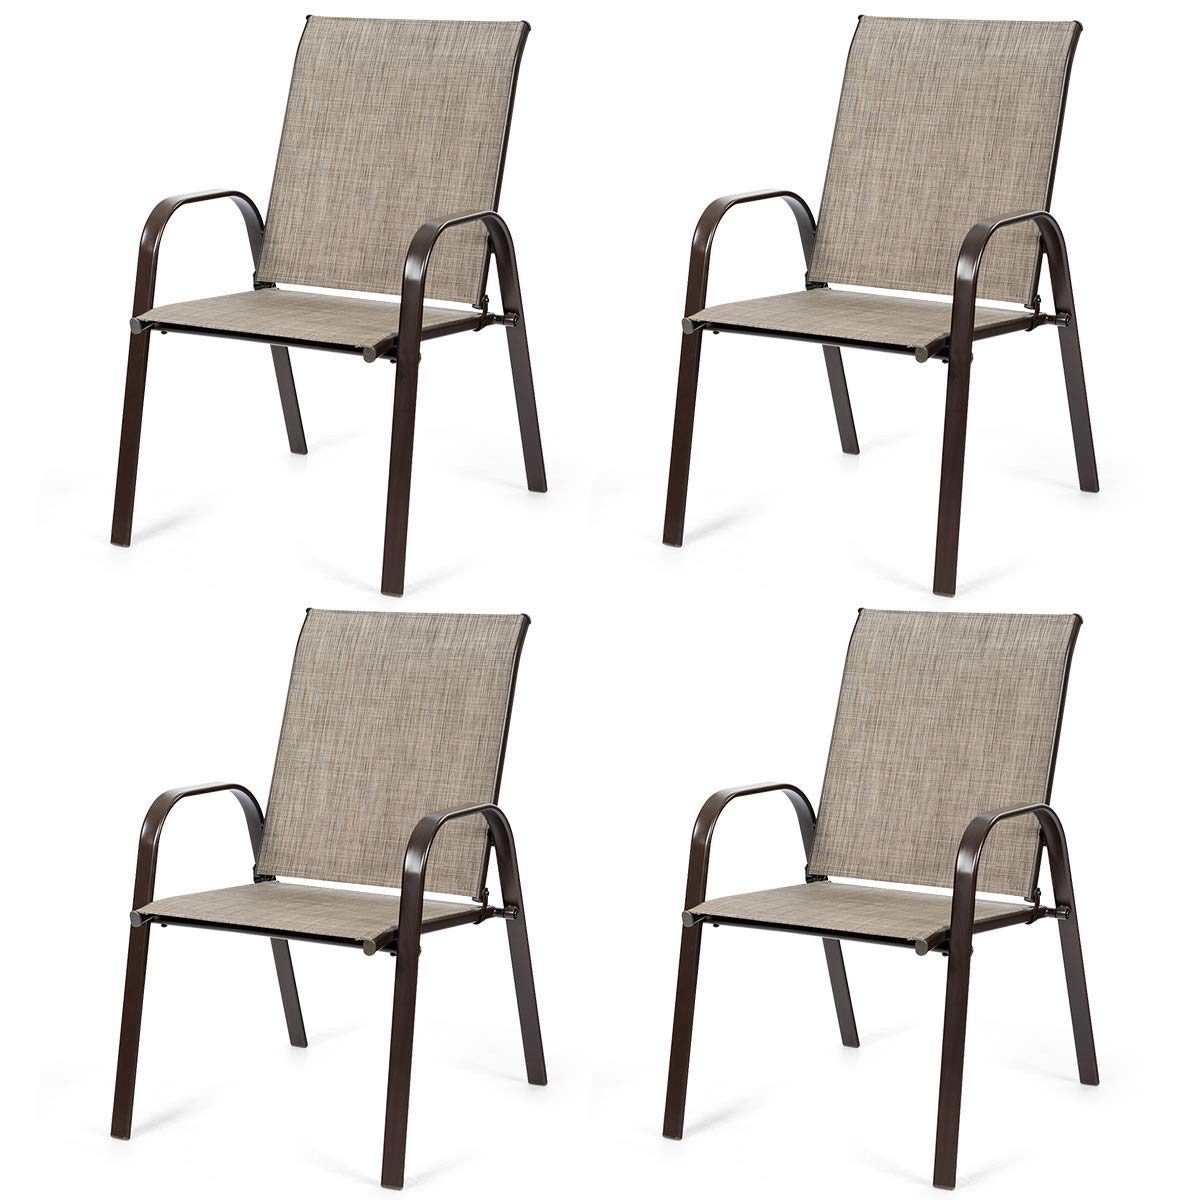 Giantex 4 Piece Patio Chairs